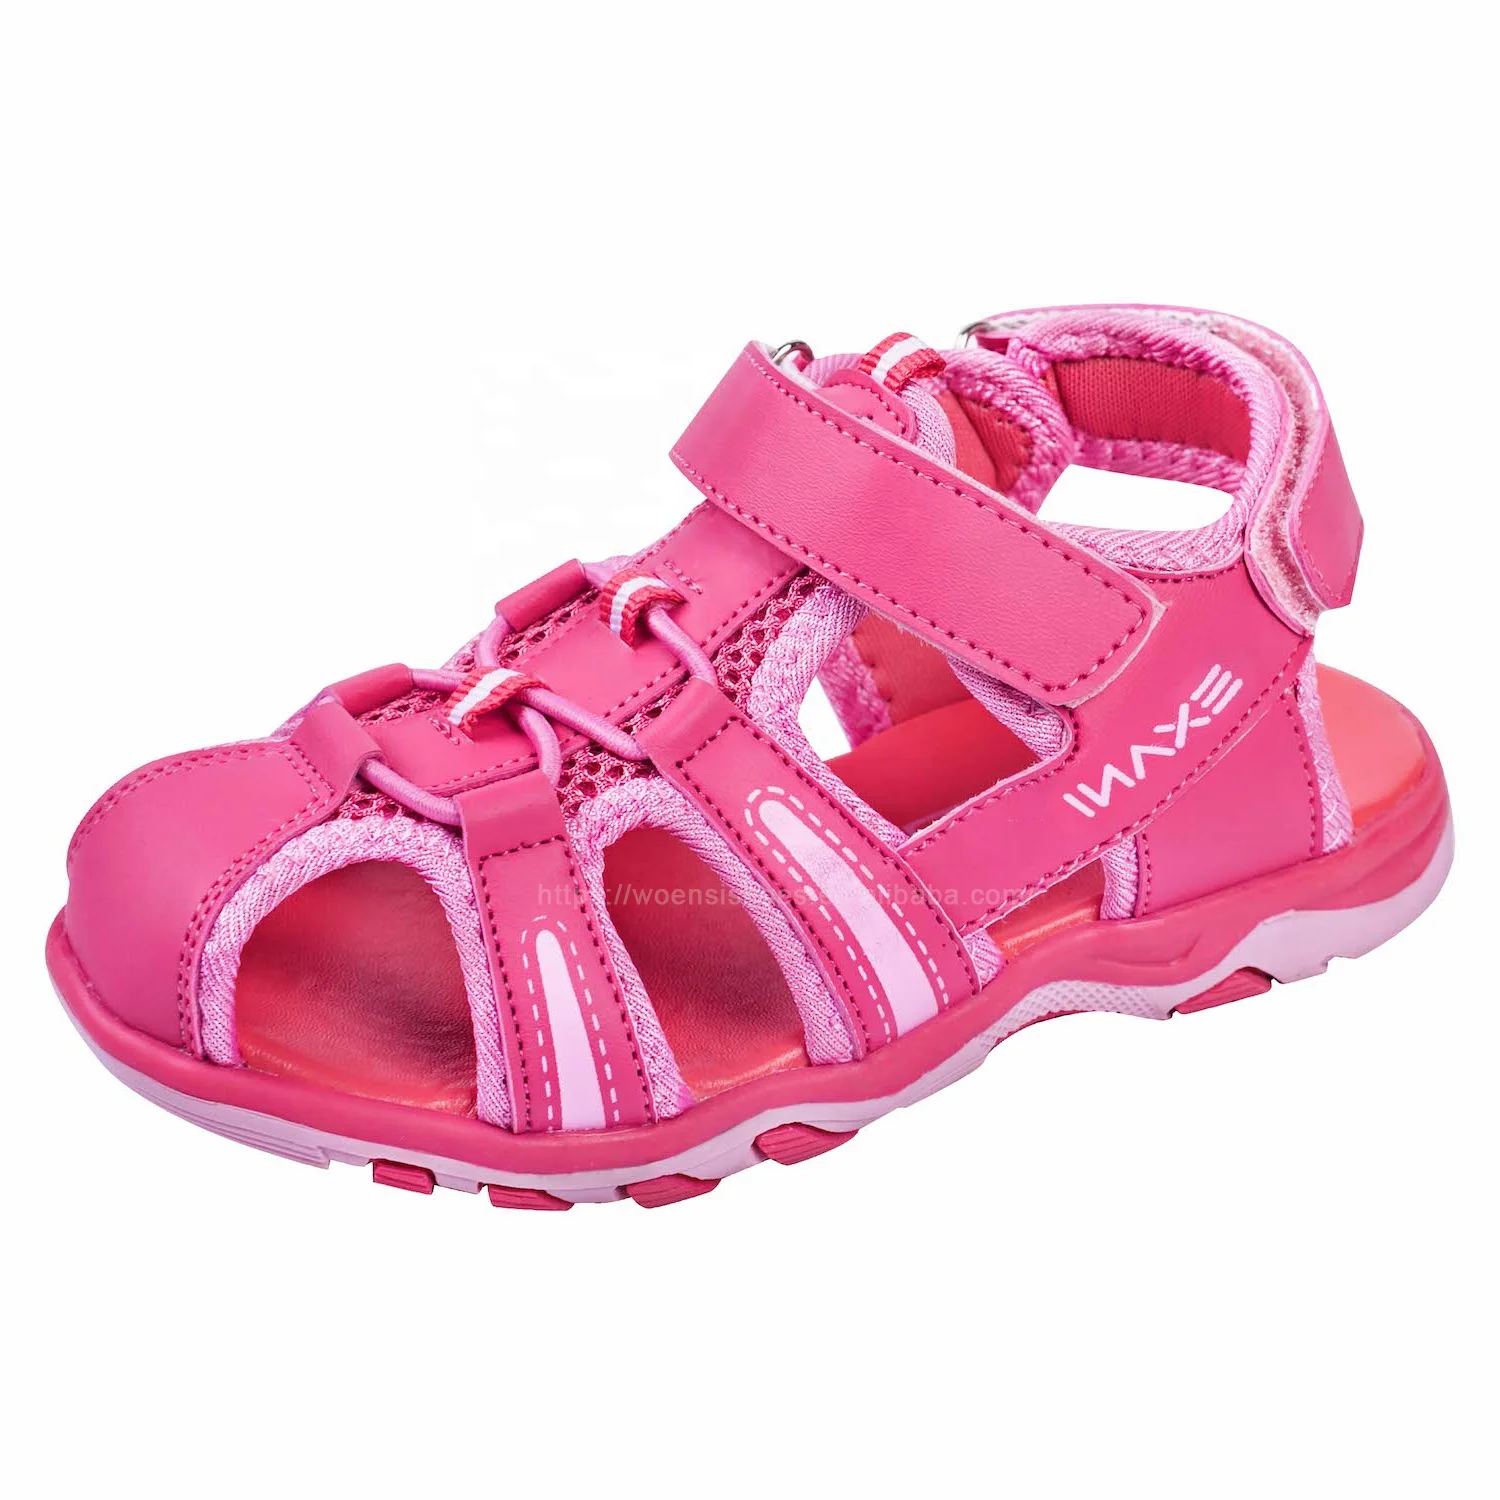 2020 new low price custom boys close toe sandals children sport sandals for kids